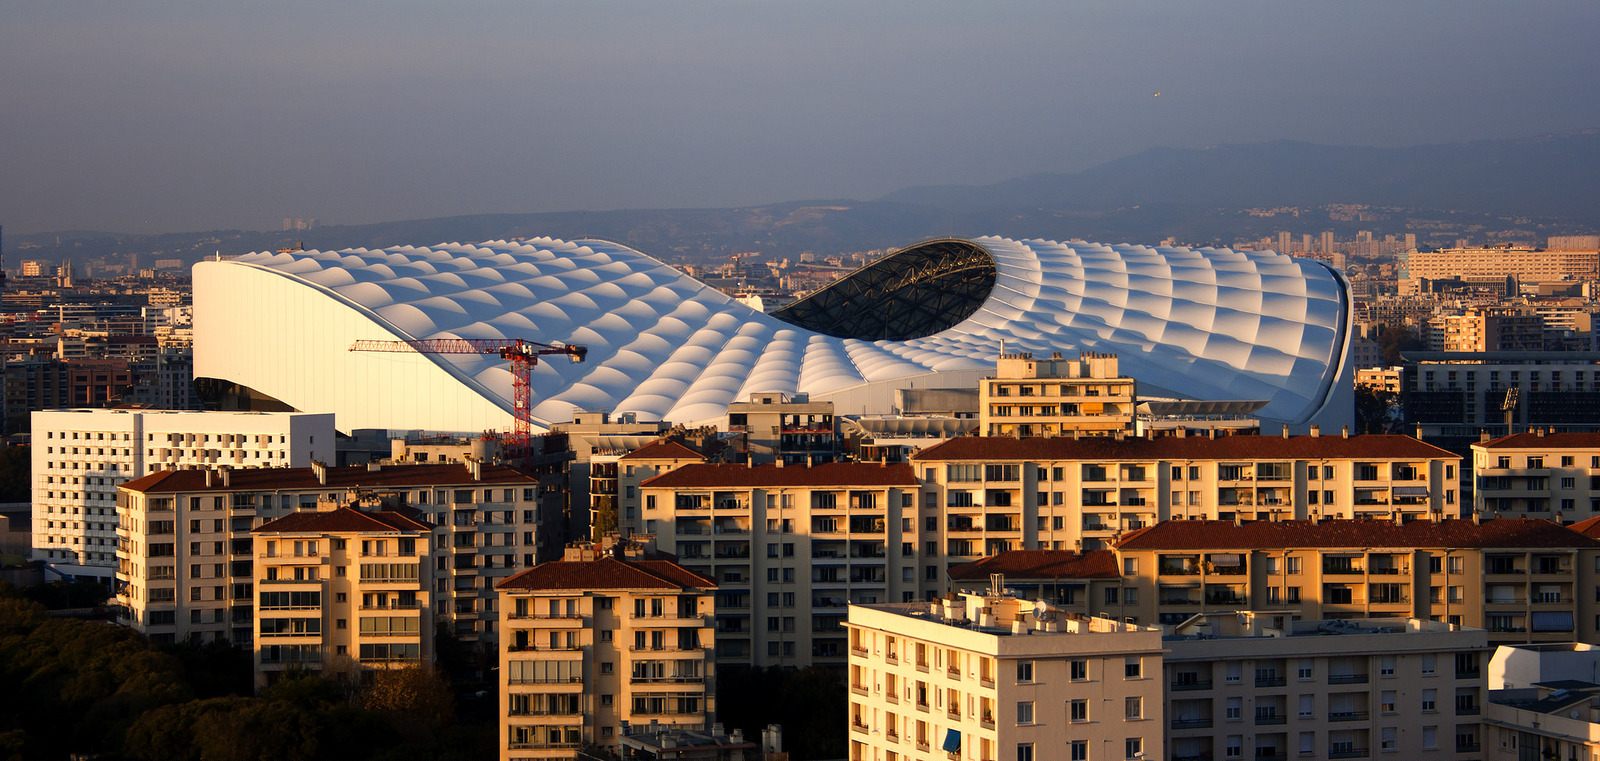 File:Stade Vélodrome (20150405).jpg - Wikipedia